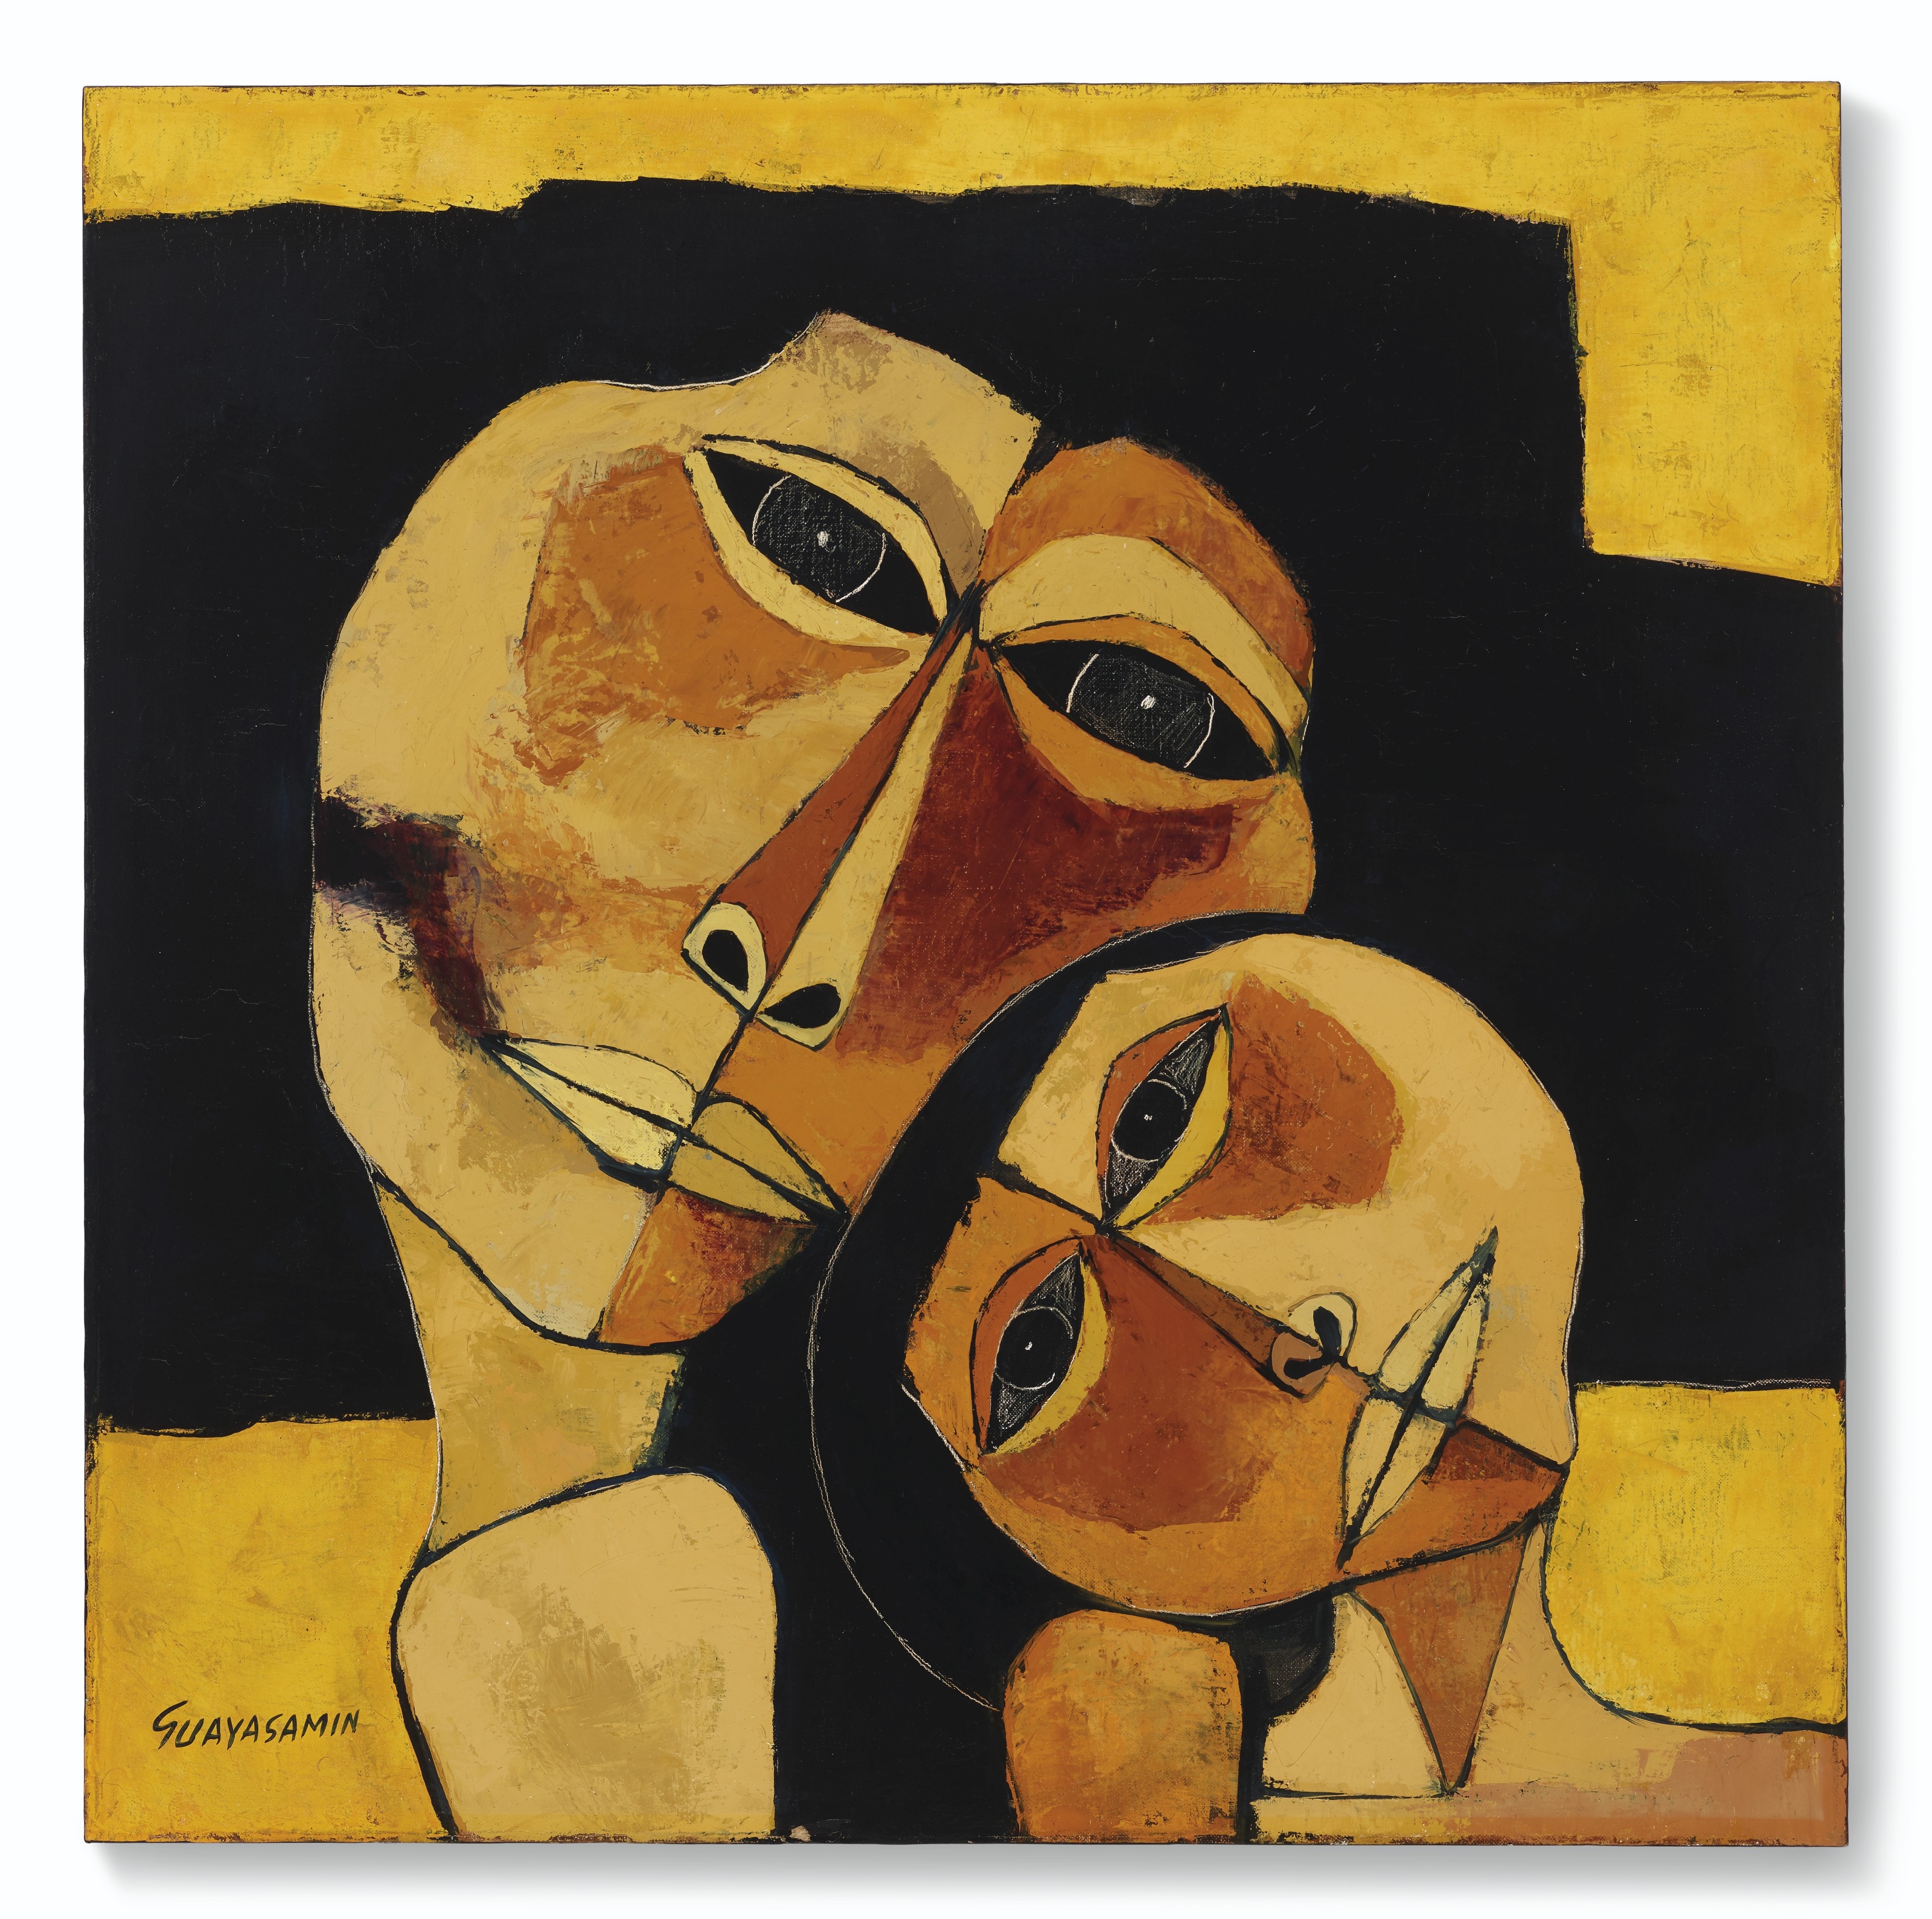 Madre y niño, fondo amarillo by Oswaldo Guayasamín, Painted in 1989